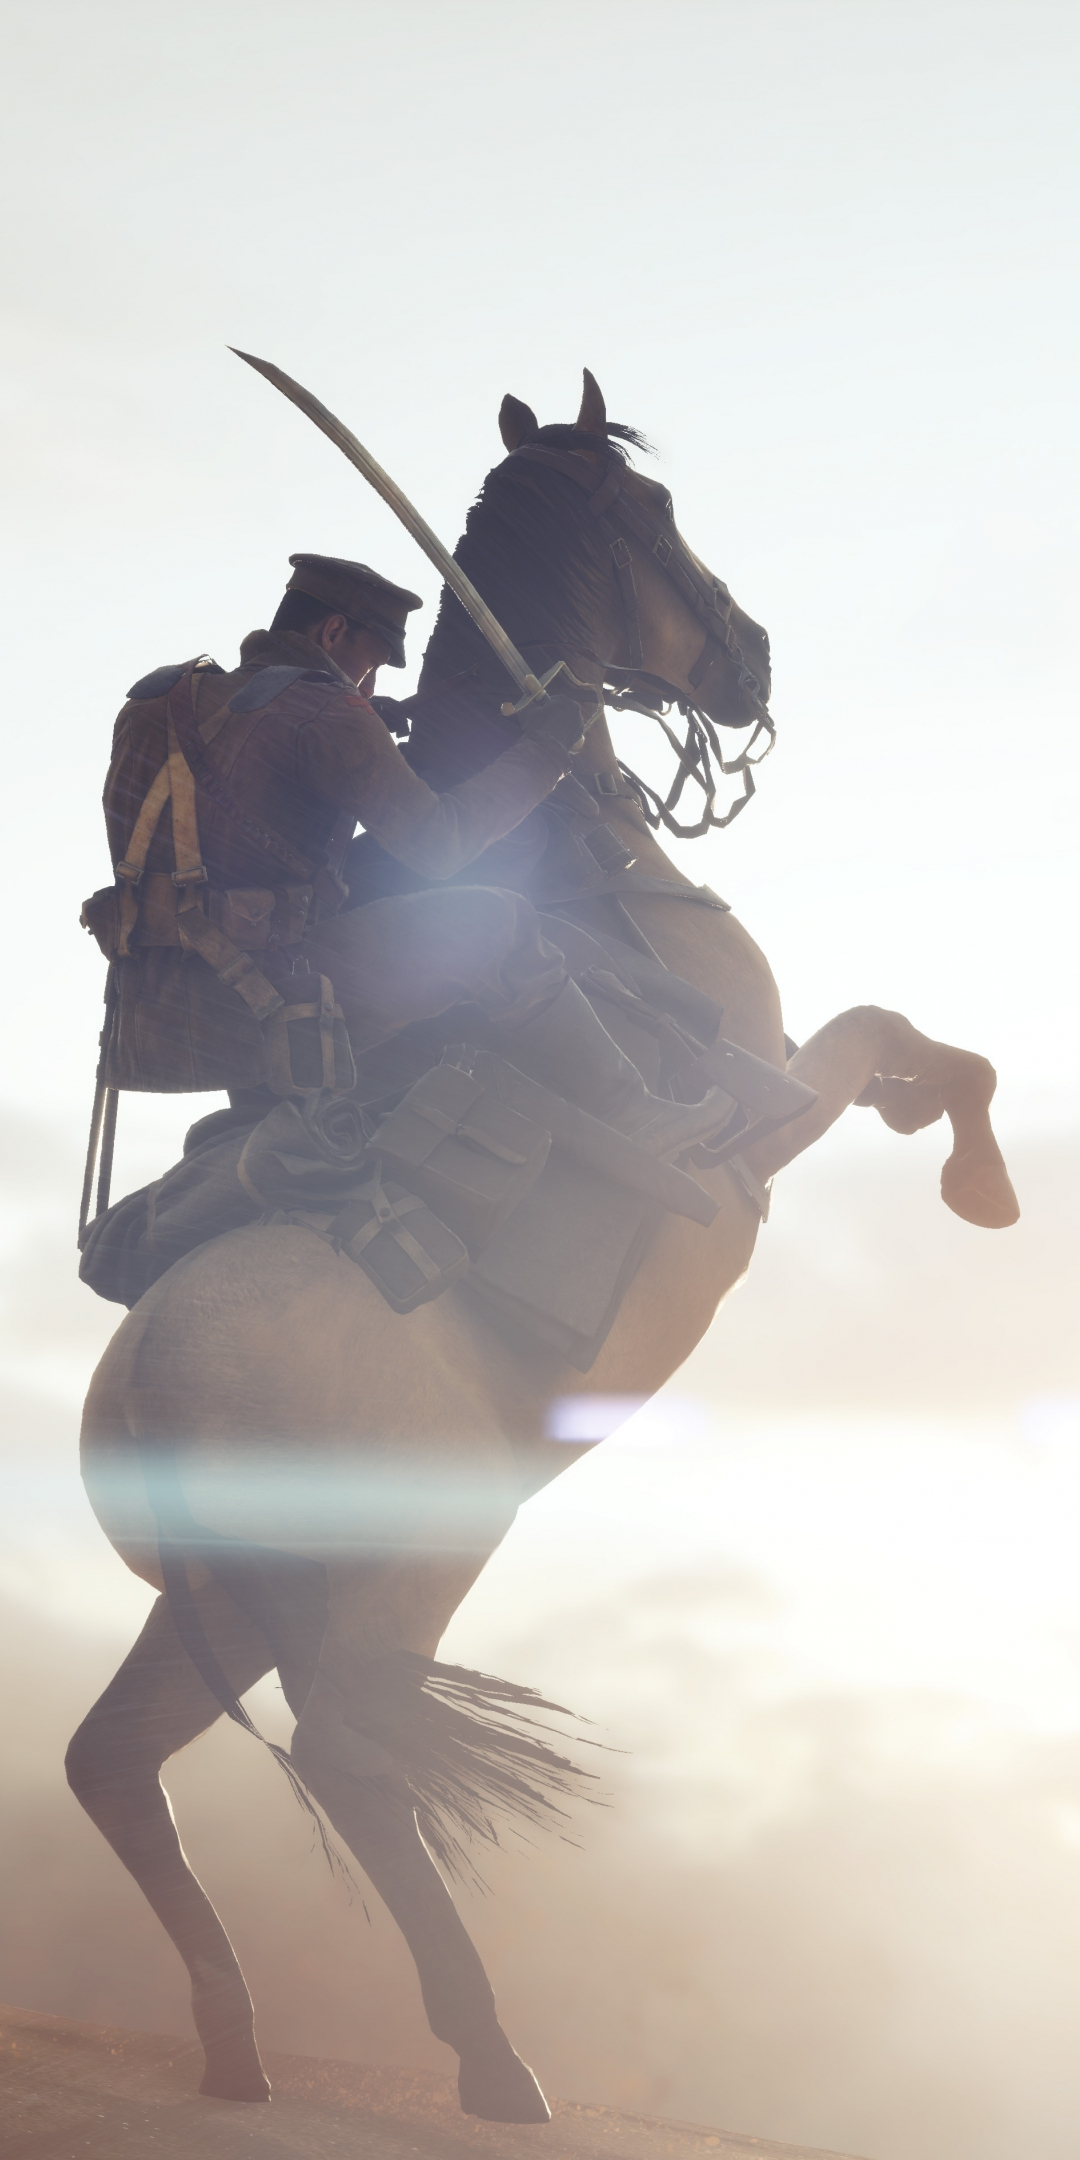 Battlefield 1, horse ride, soldier, 5k, 1080x2160 wallpaper